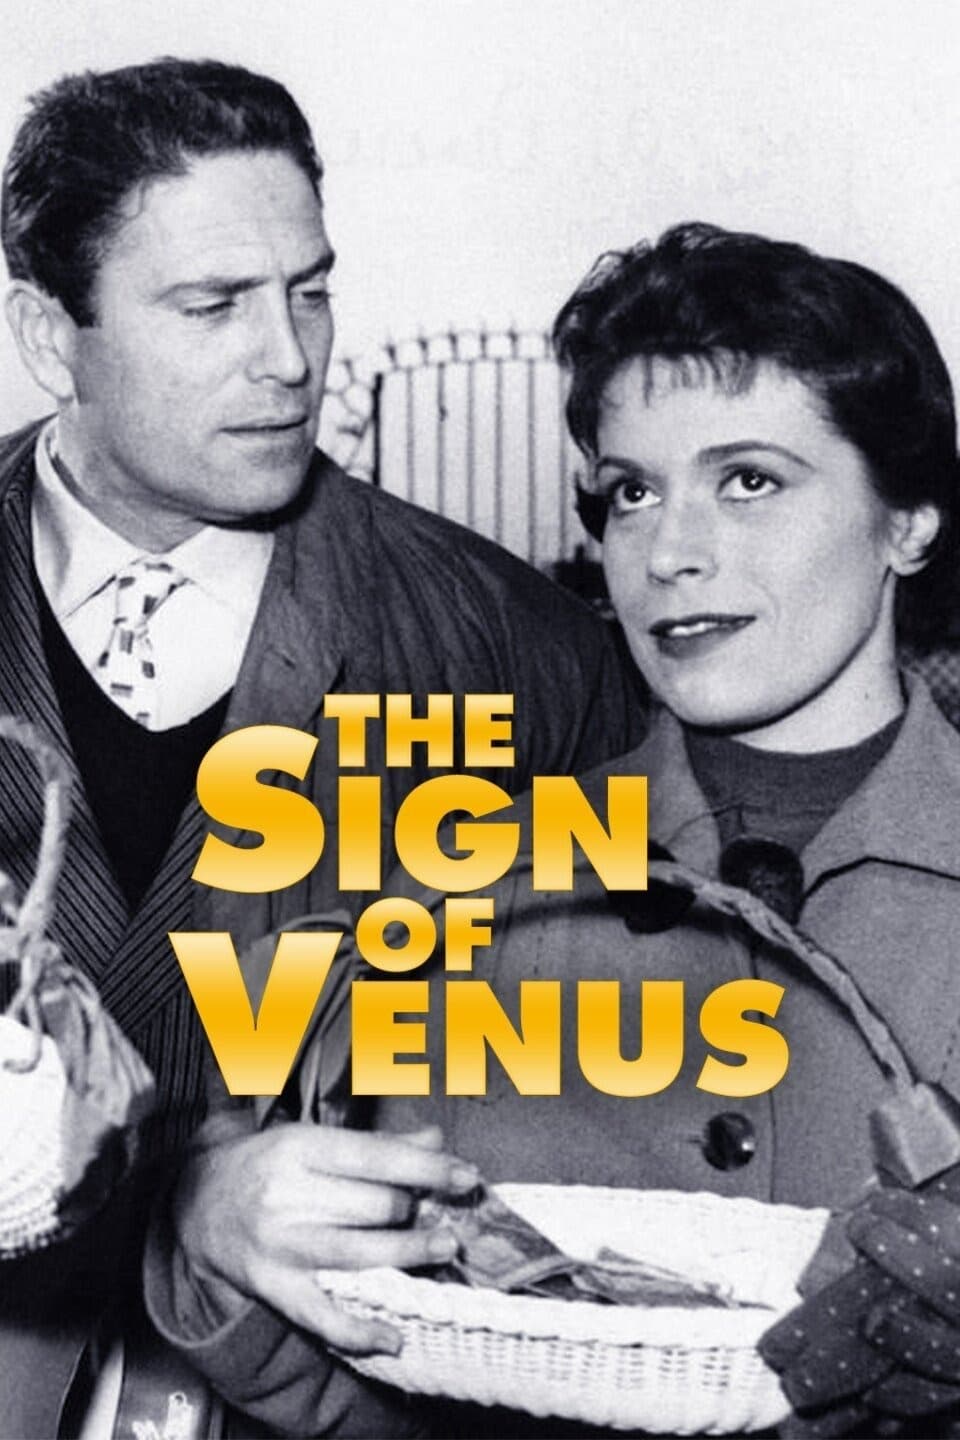 The Sign of Venus (1955)